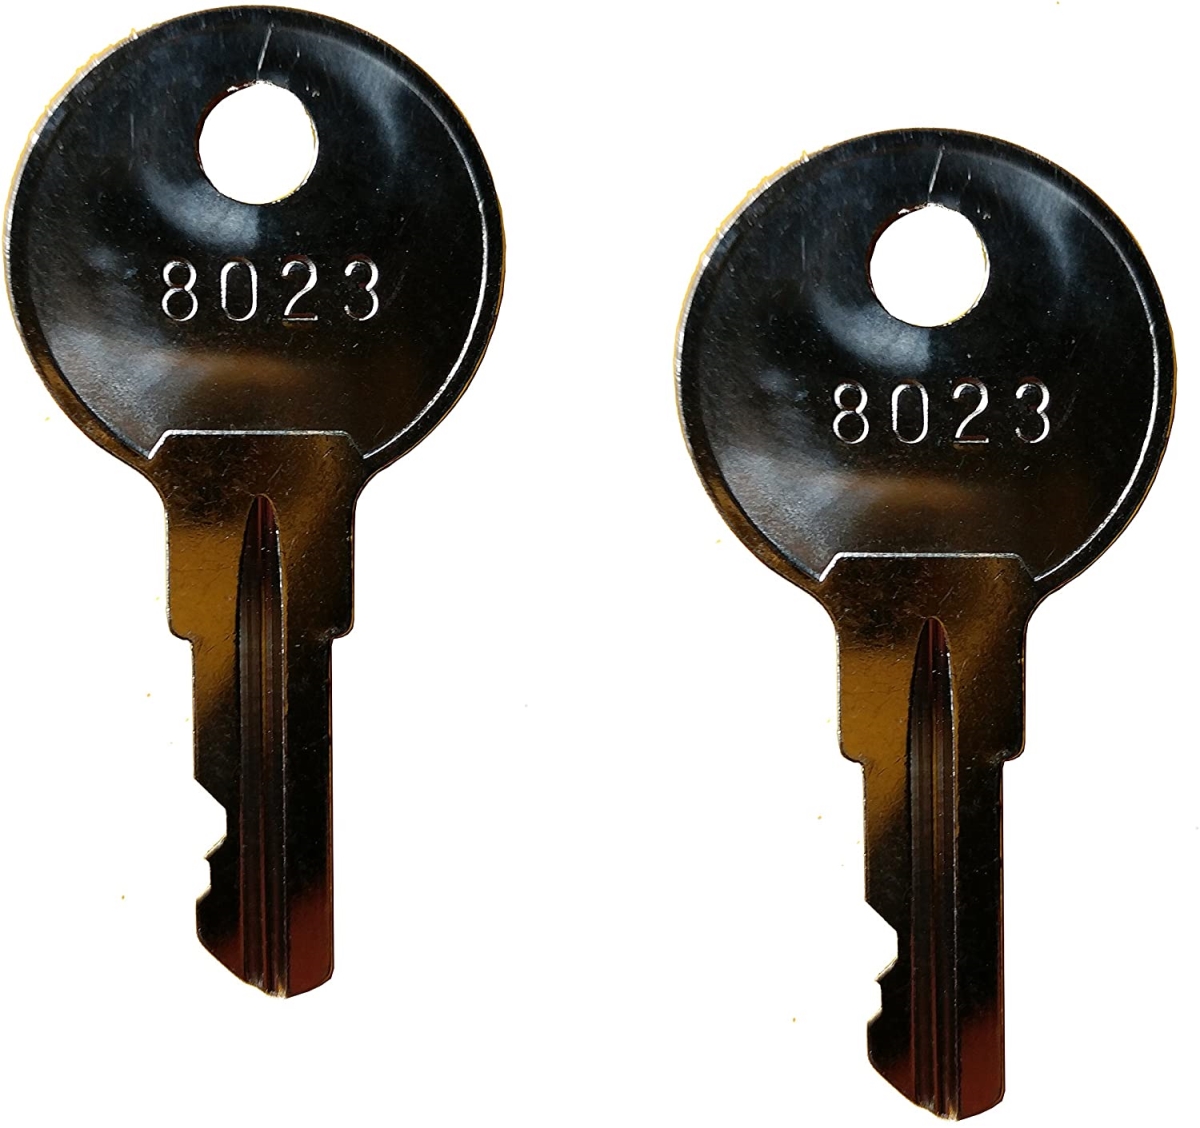 Picture of Posiflex KEY-CR8023 Lock 23 Cash Drawer Keys - Set of 2